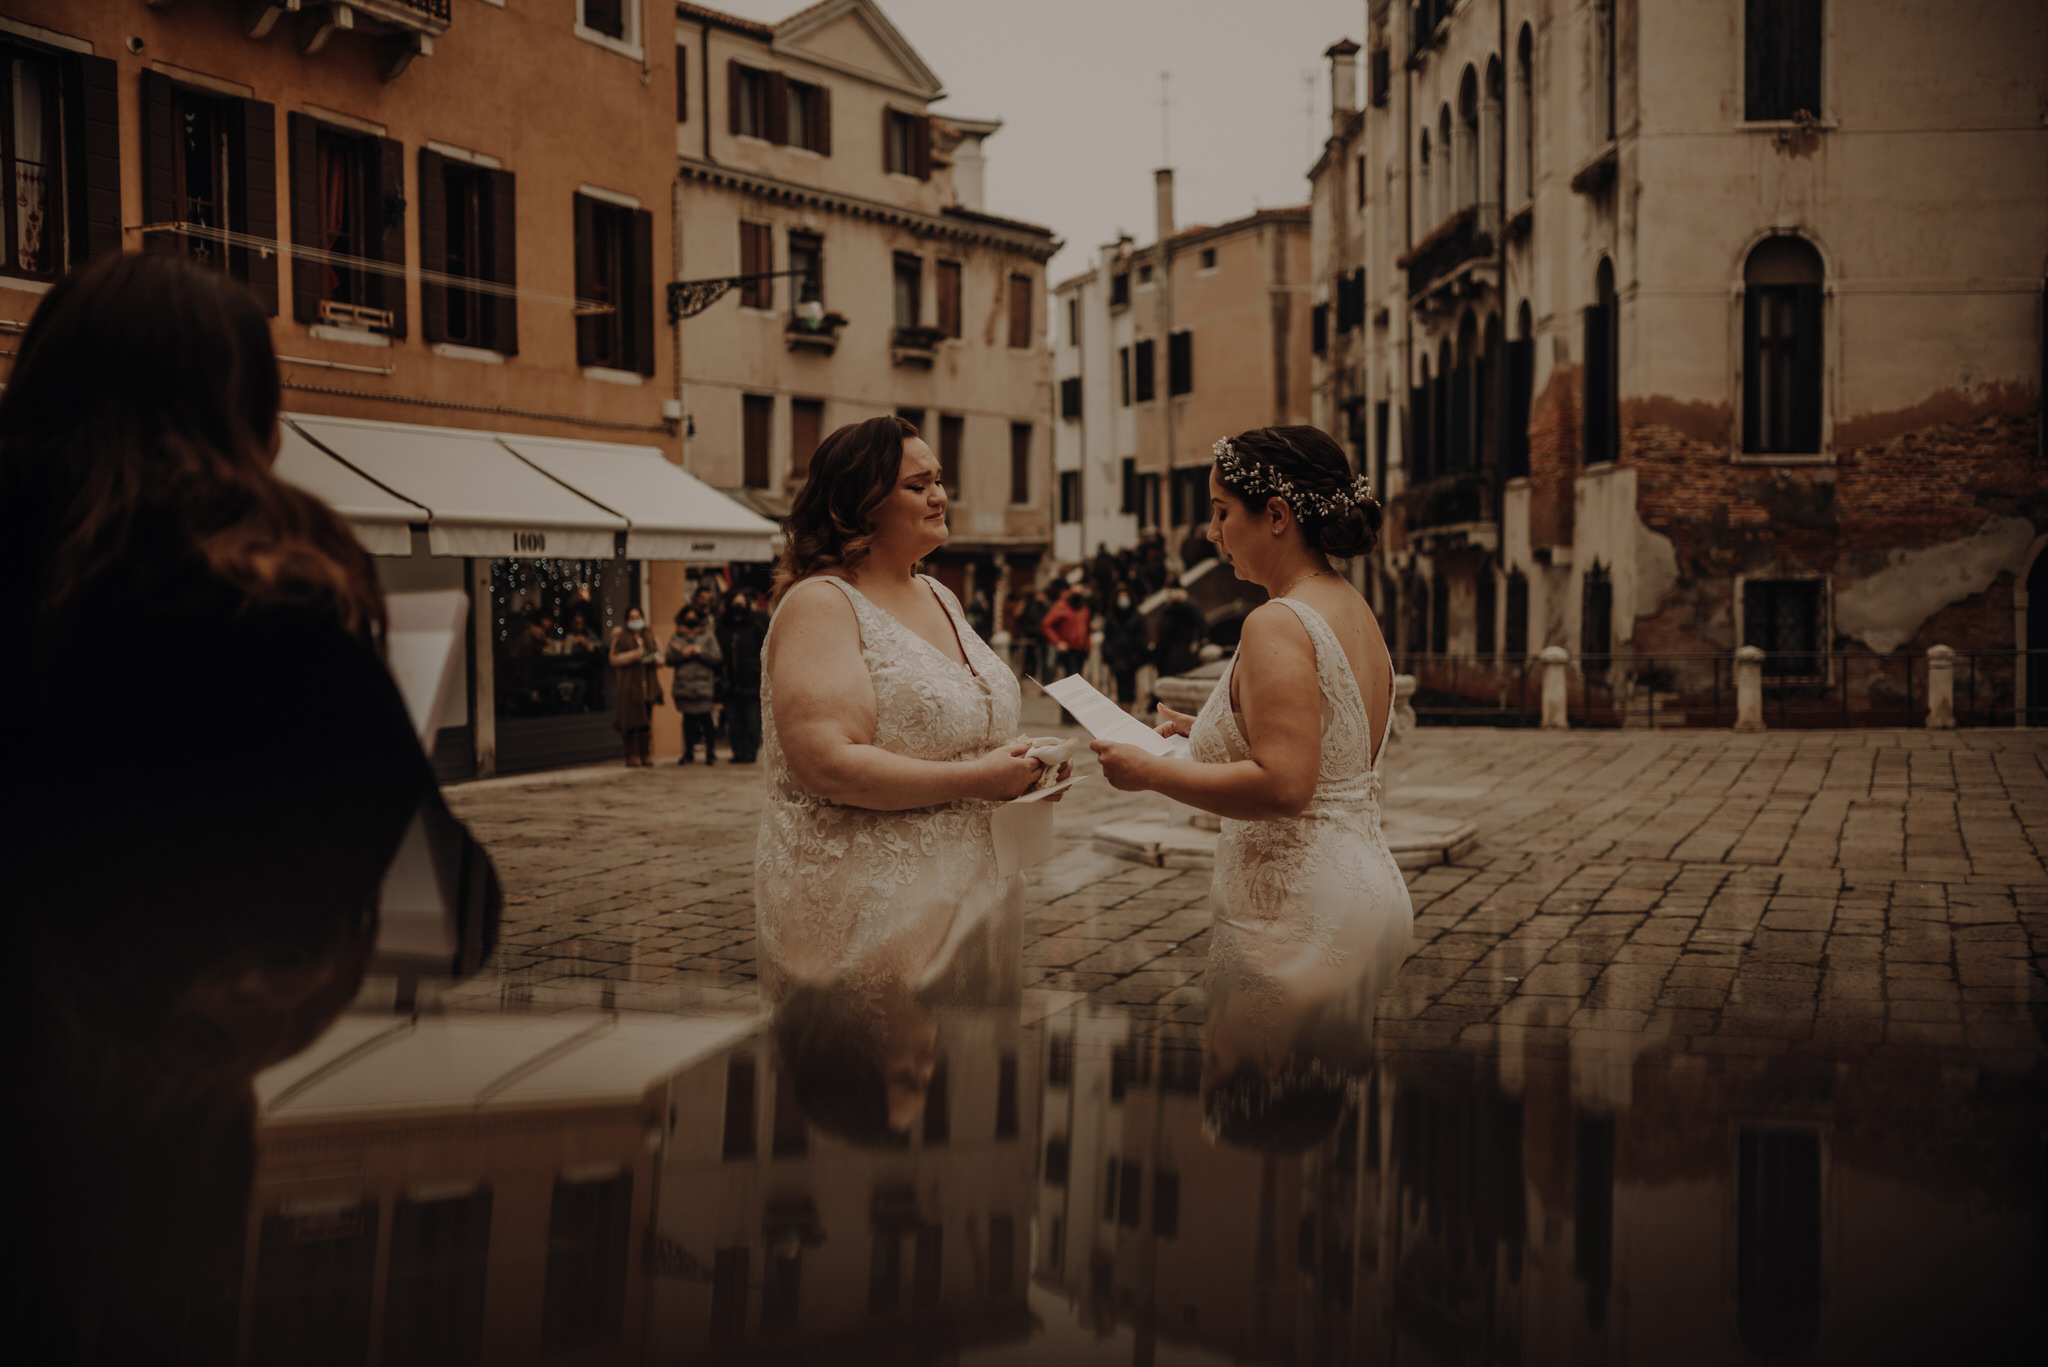 LGBTQ+ couple elopes in Venice